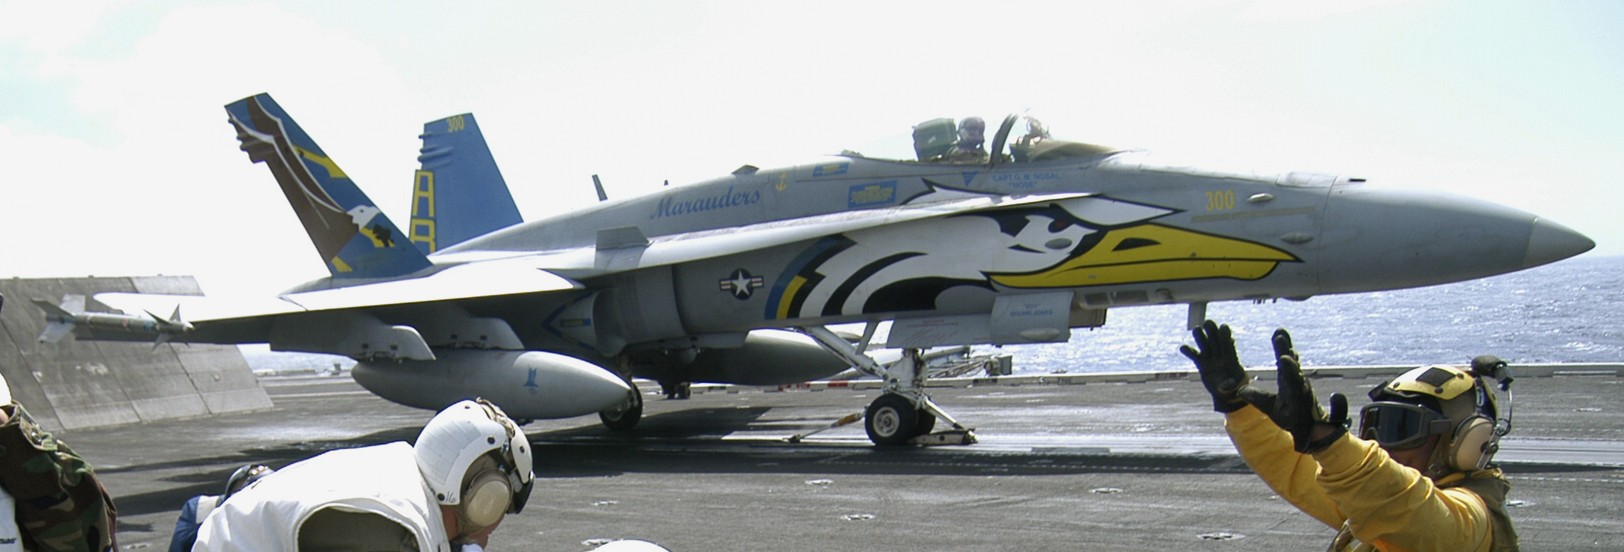 vfa-82 marauders strike fighter squadron f/a-18c hornet cvw-1 uss enterprise cvn-65 05